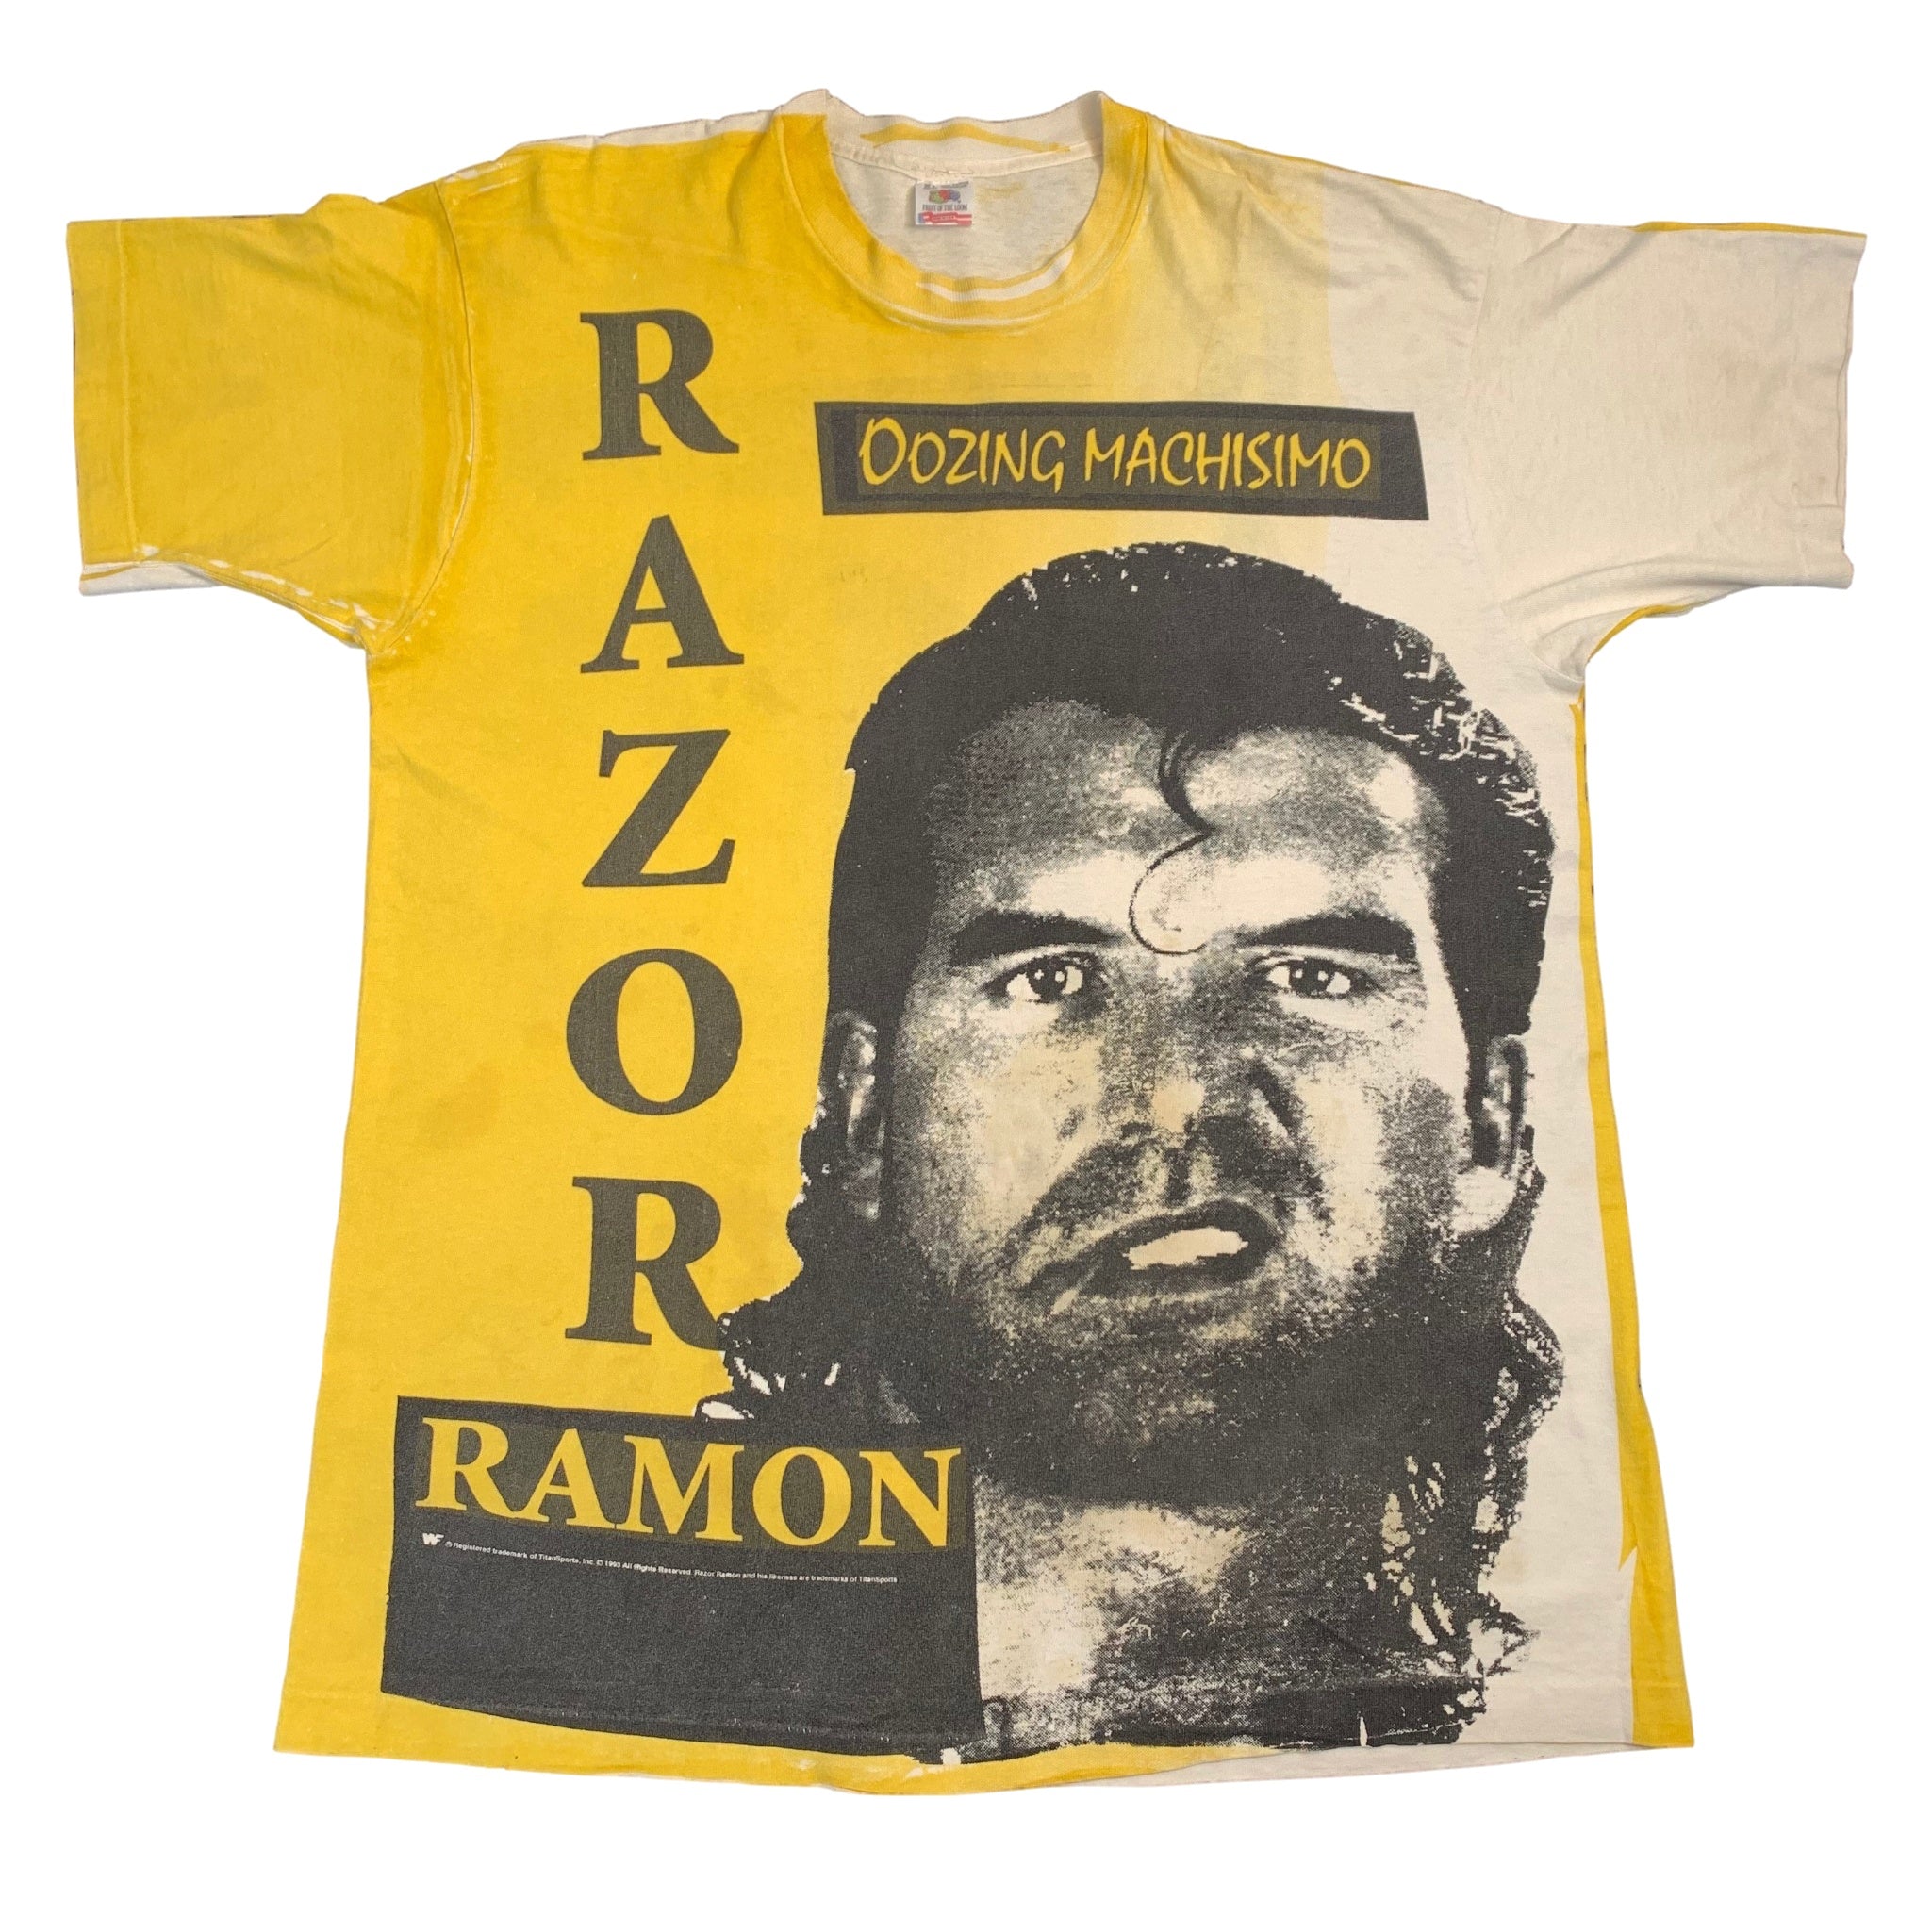 RIZZO - H To The Rizzo T-Shirt – Lame LLama